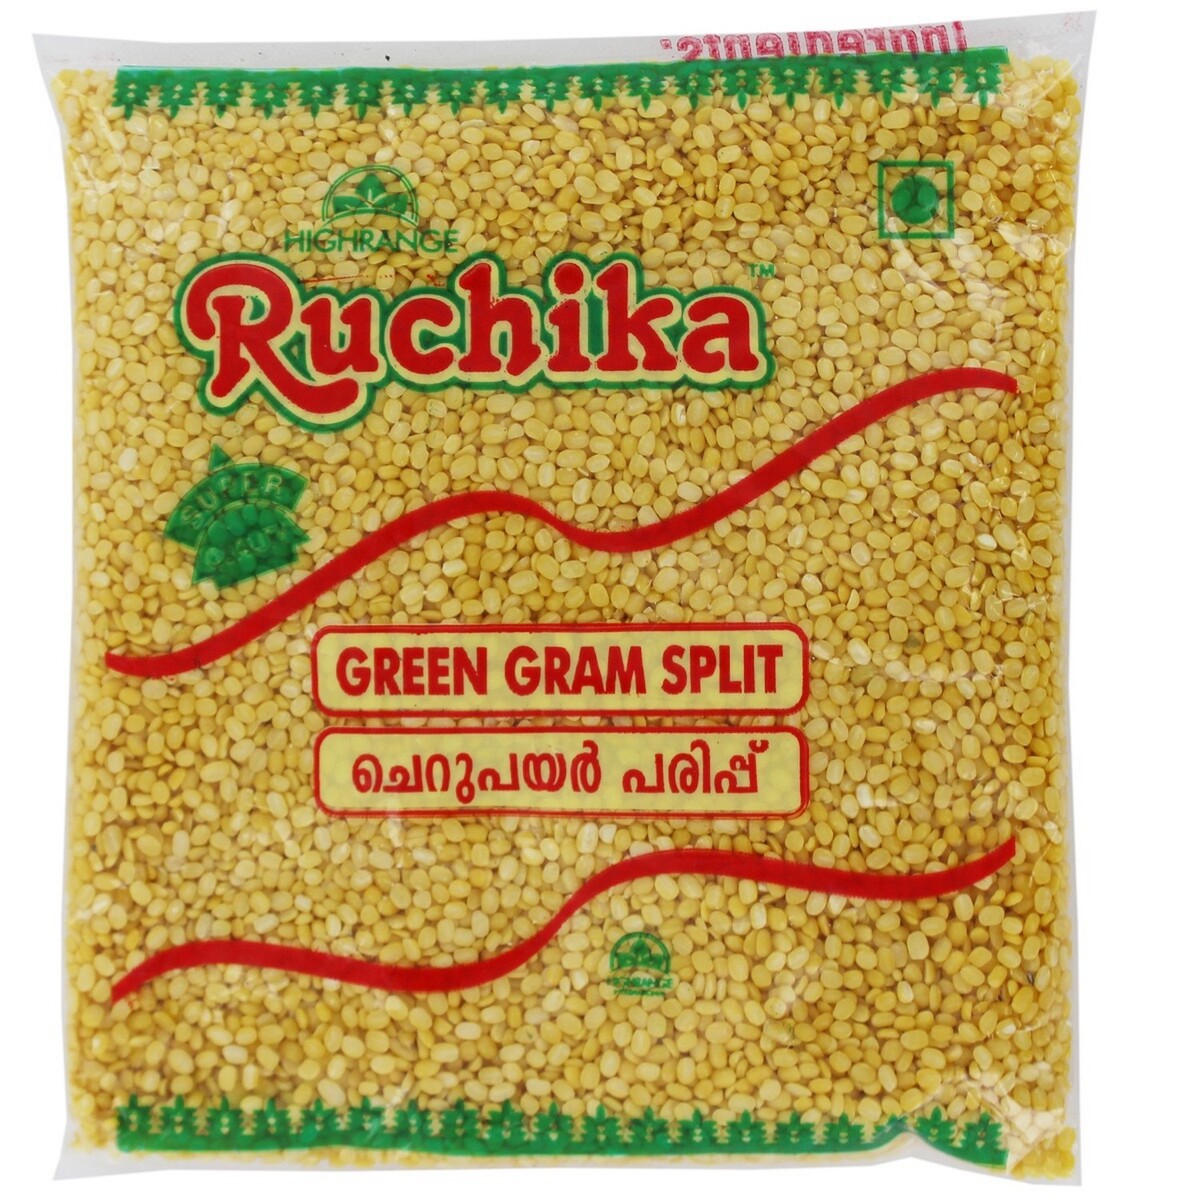 Ruchika Green Gram Split (Cherupayar Parippu) 500g